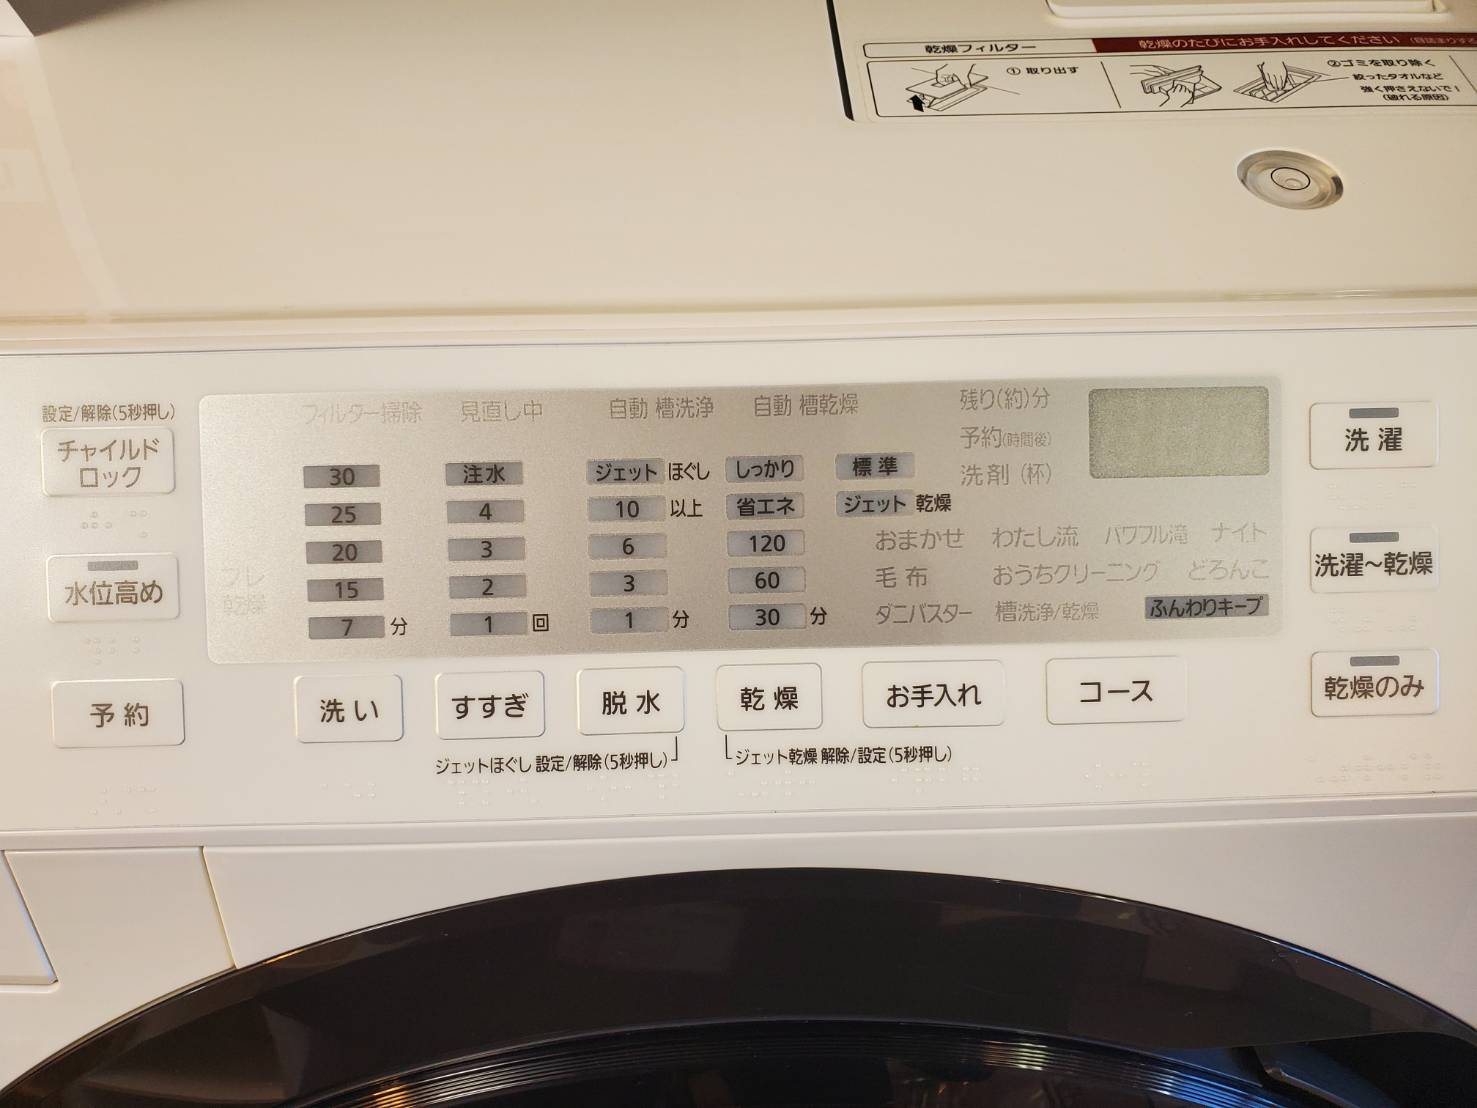 ☆Panasonic パナソニック 10/6㎏ ななめドラム洗濯乾燥機 2020年製 超 